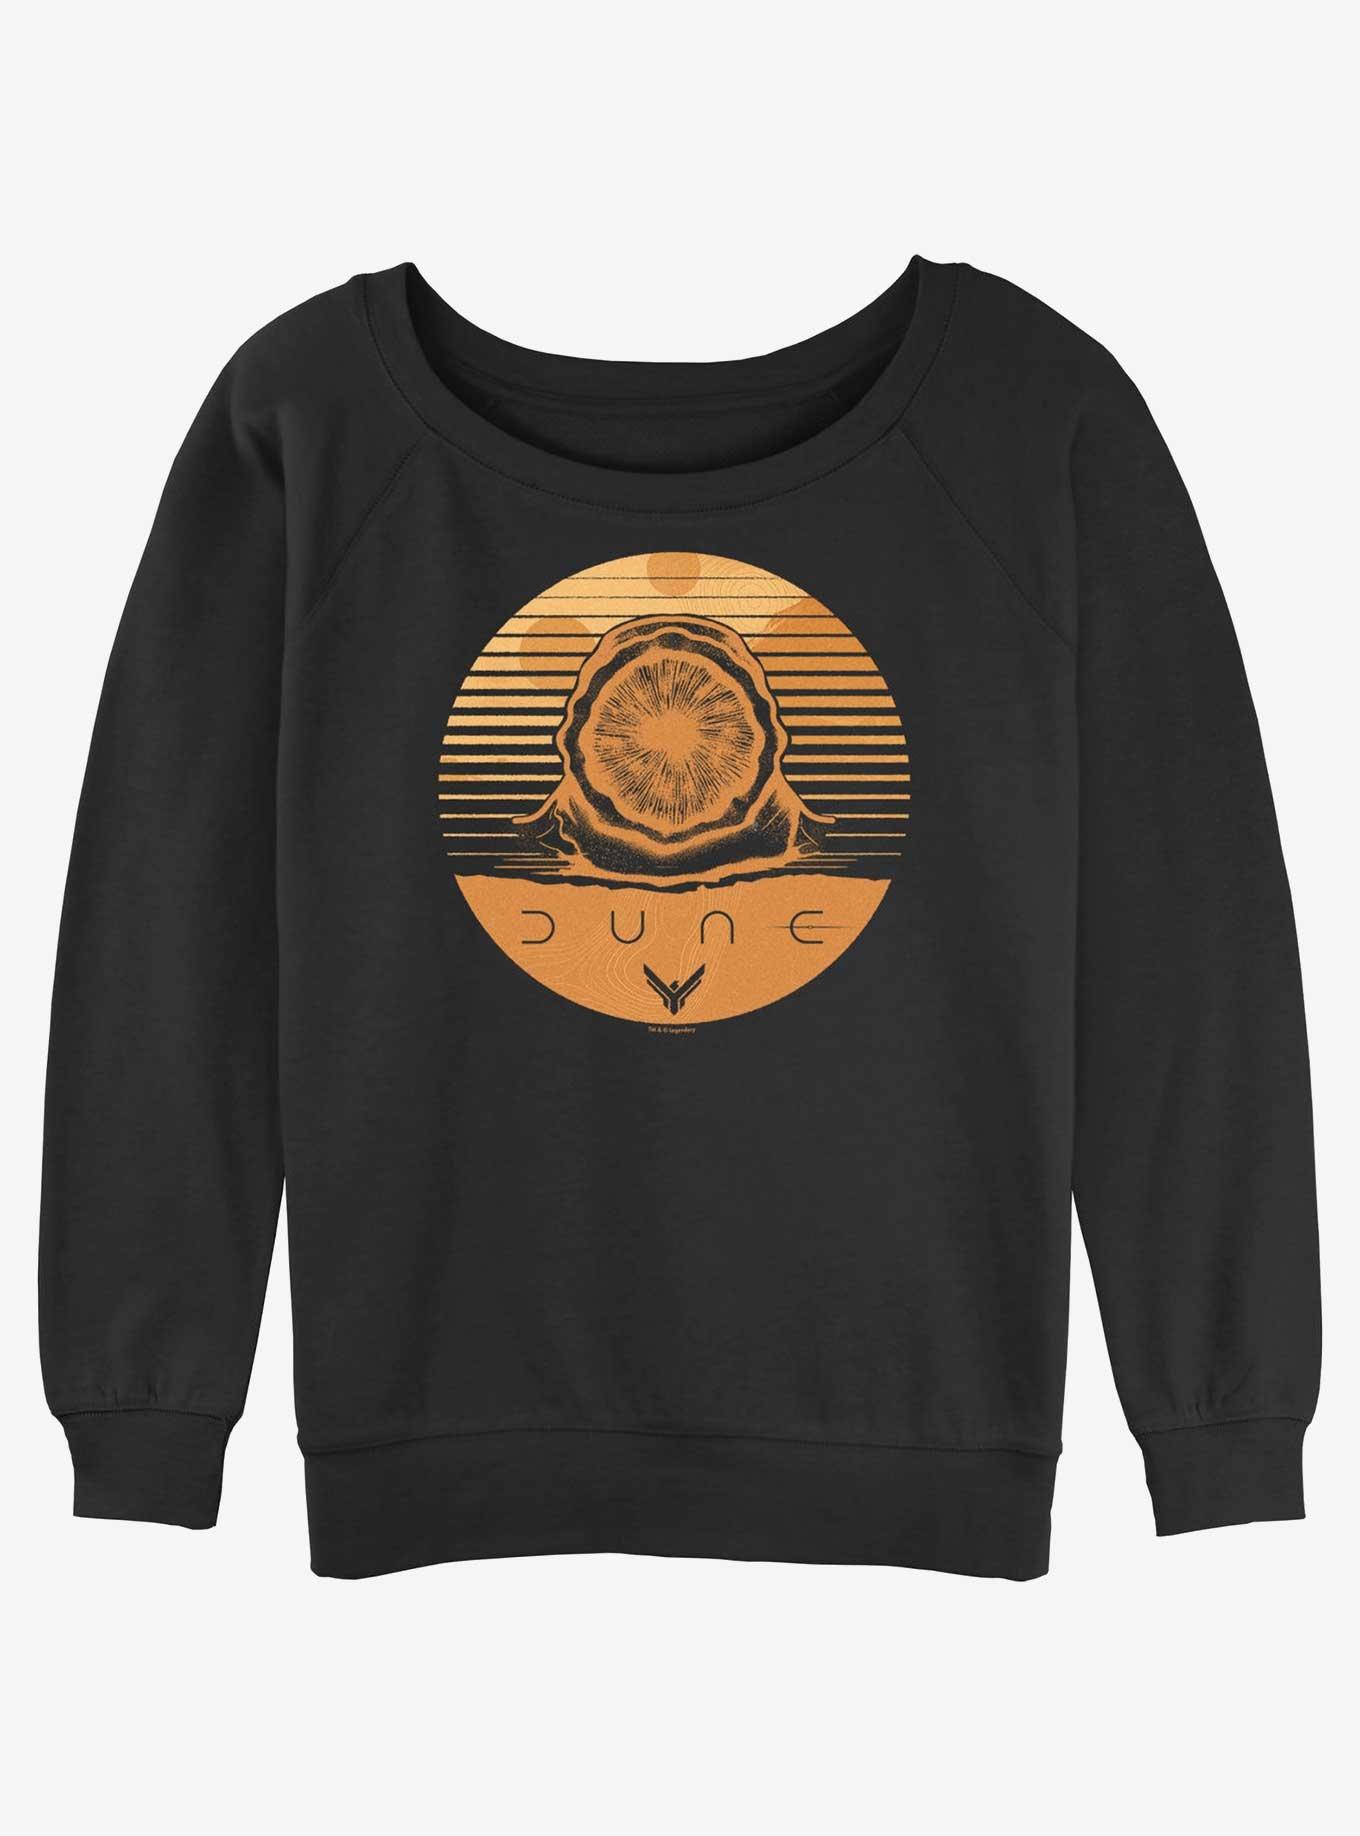 Dune: Part Two Arrakis Sandworm Stamp Girls Slouchy Sweatshirt